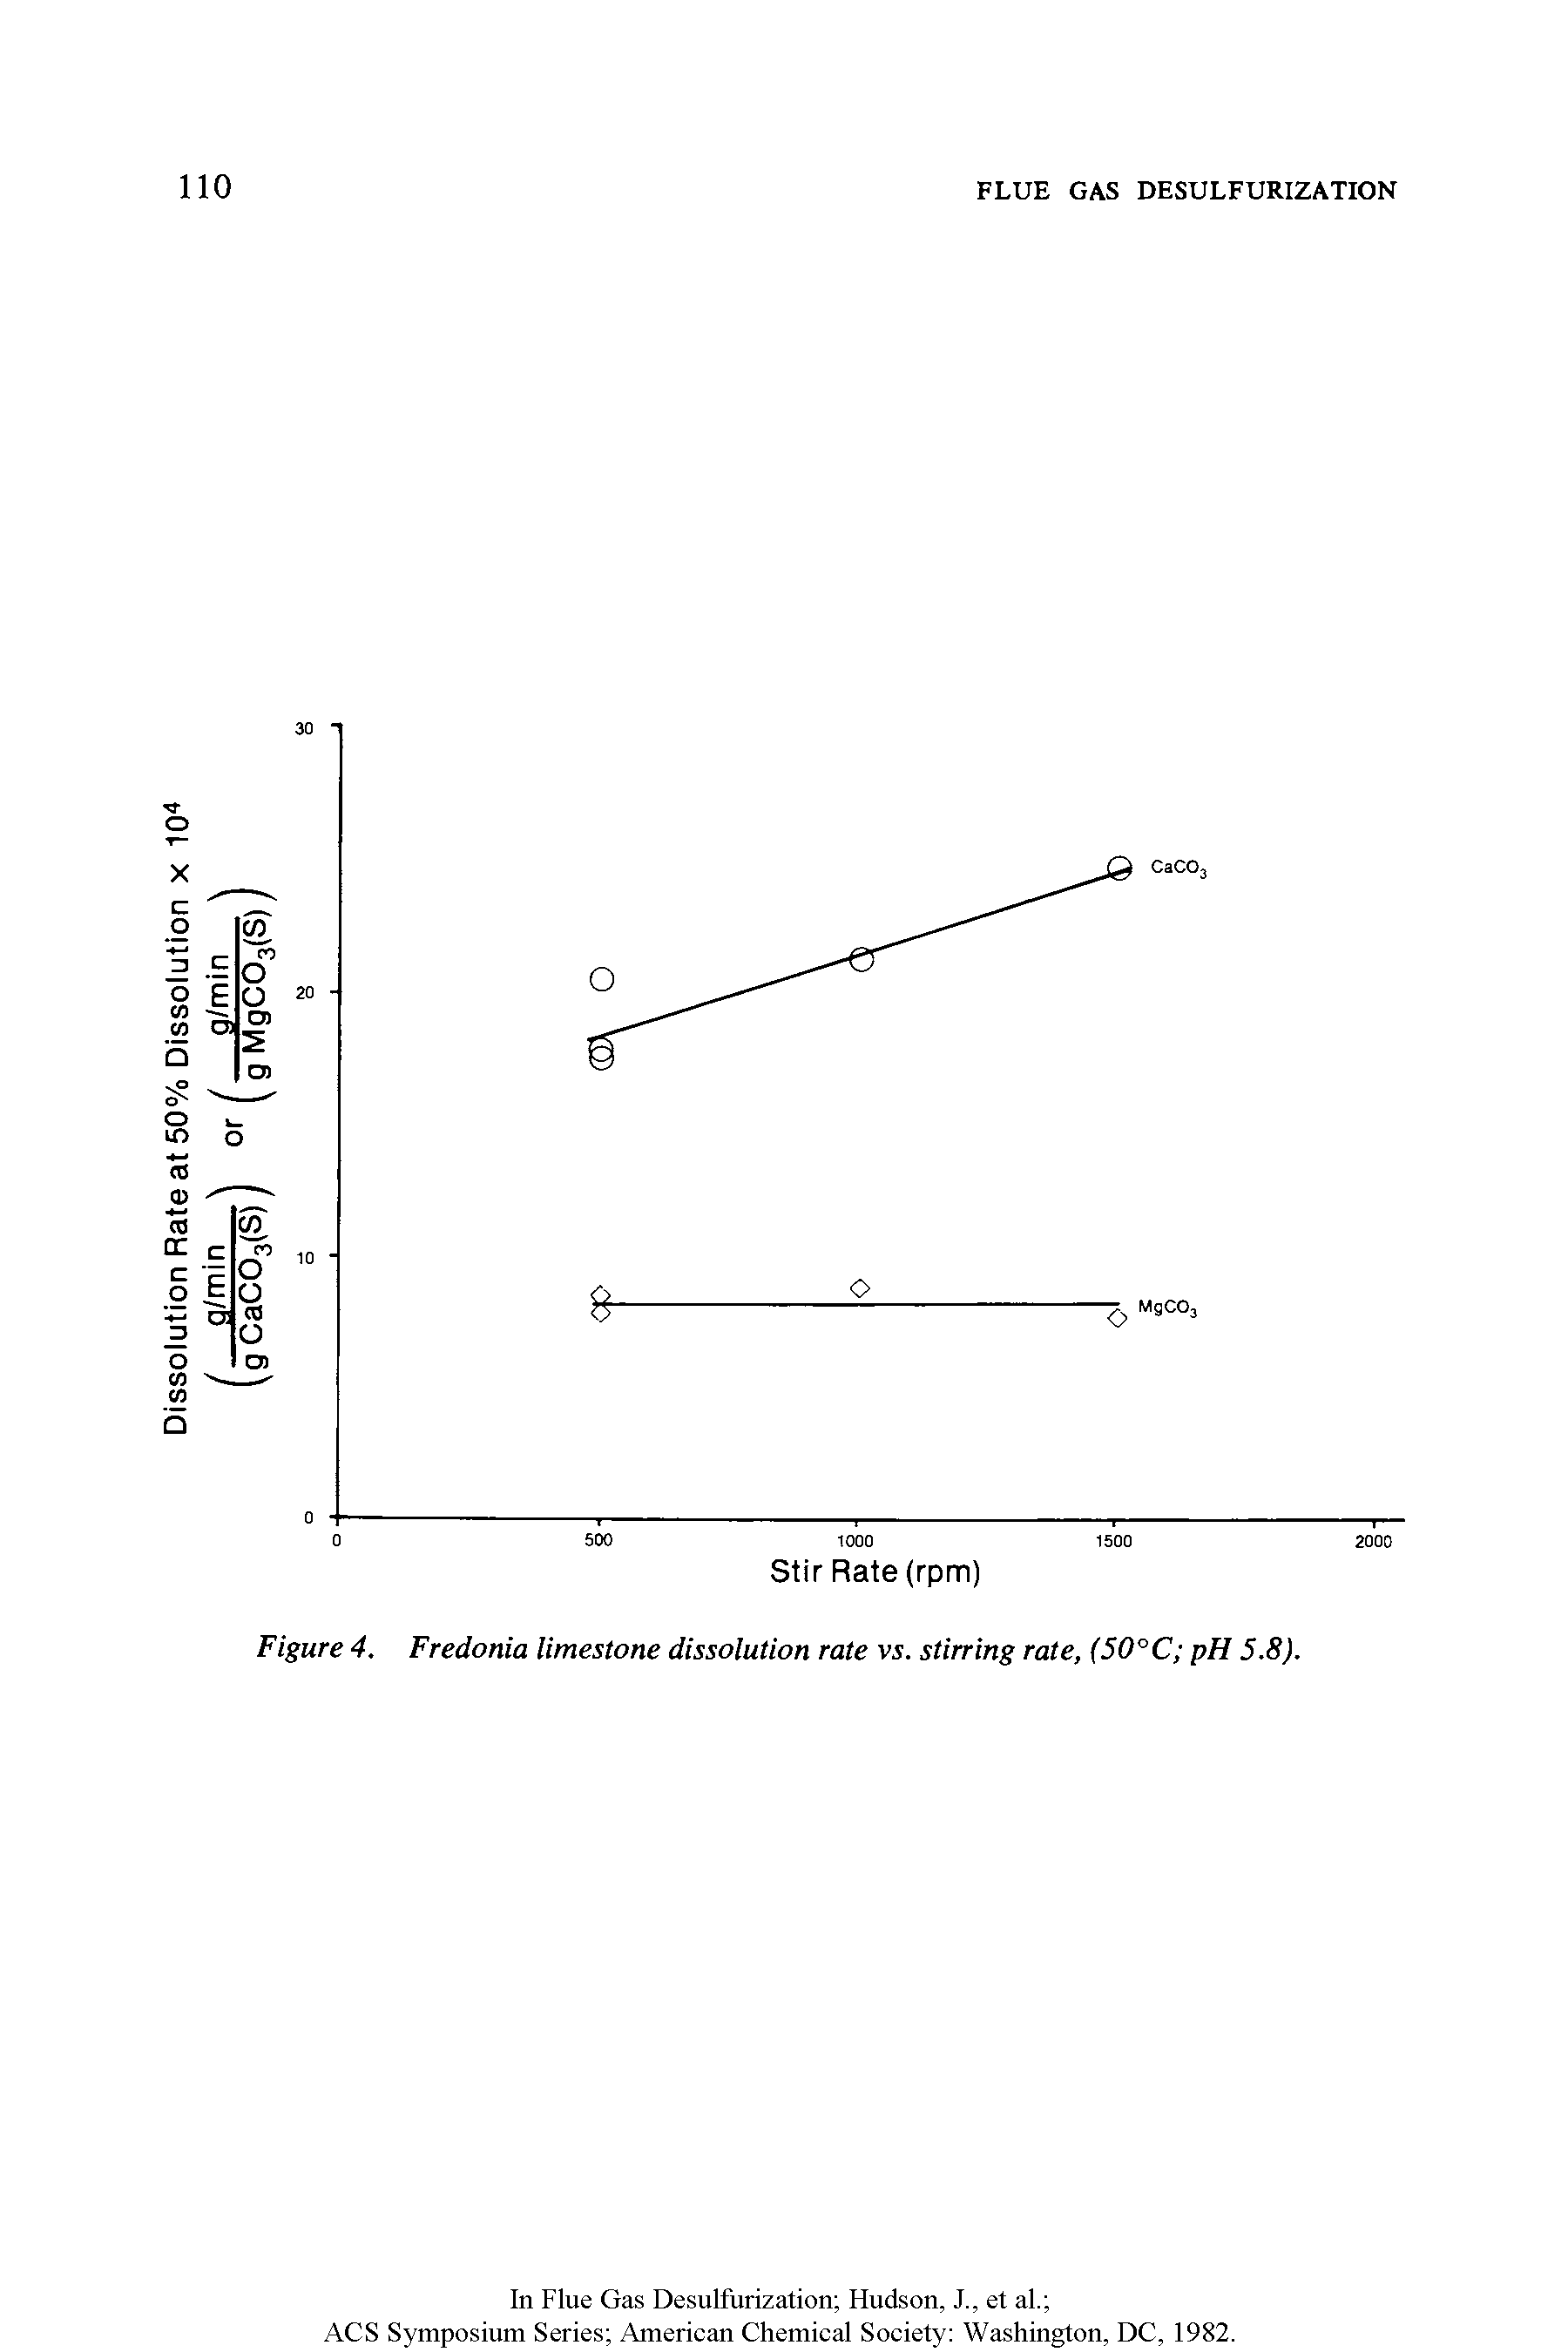 Figure 4. Fredonia limestone dissolution rate vs. stirring rate, (50°C pH 5.8).